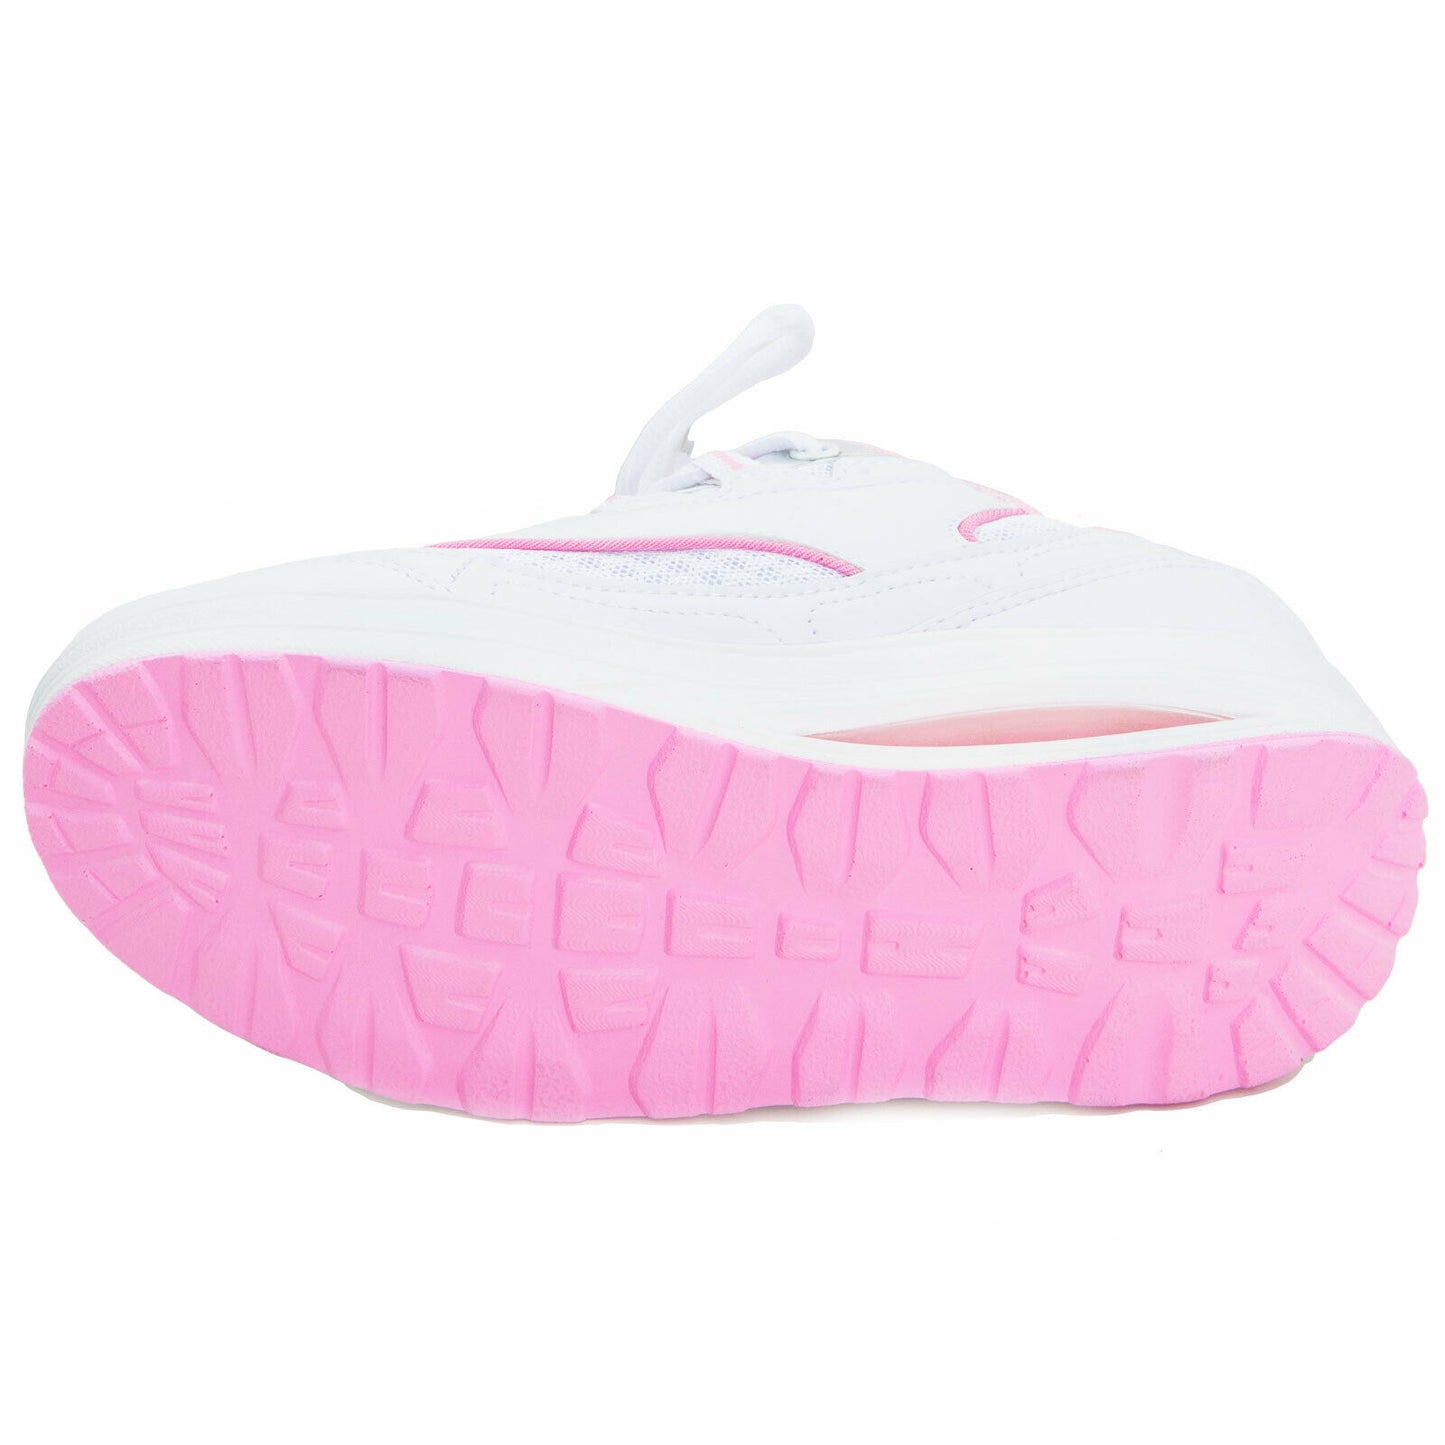 immagine-15-toocool-scarpe-donna-sneakers-sportive-w2830